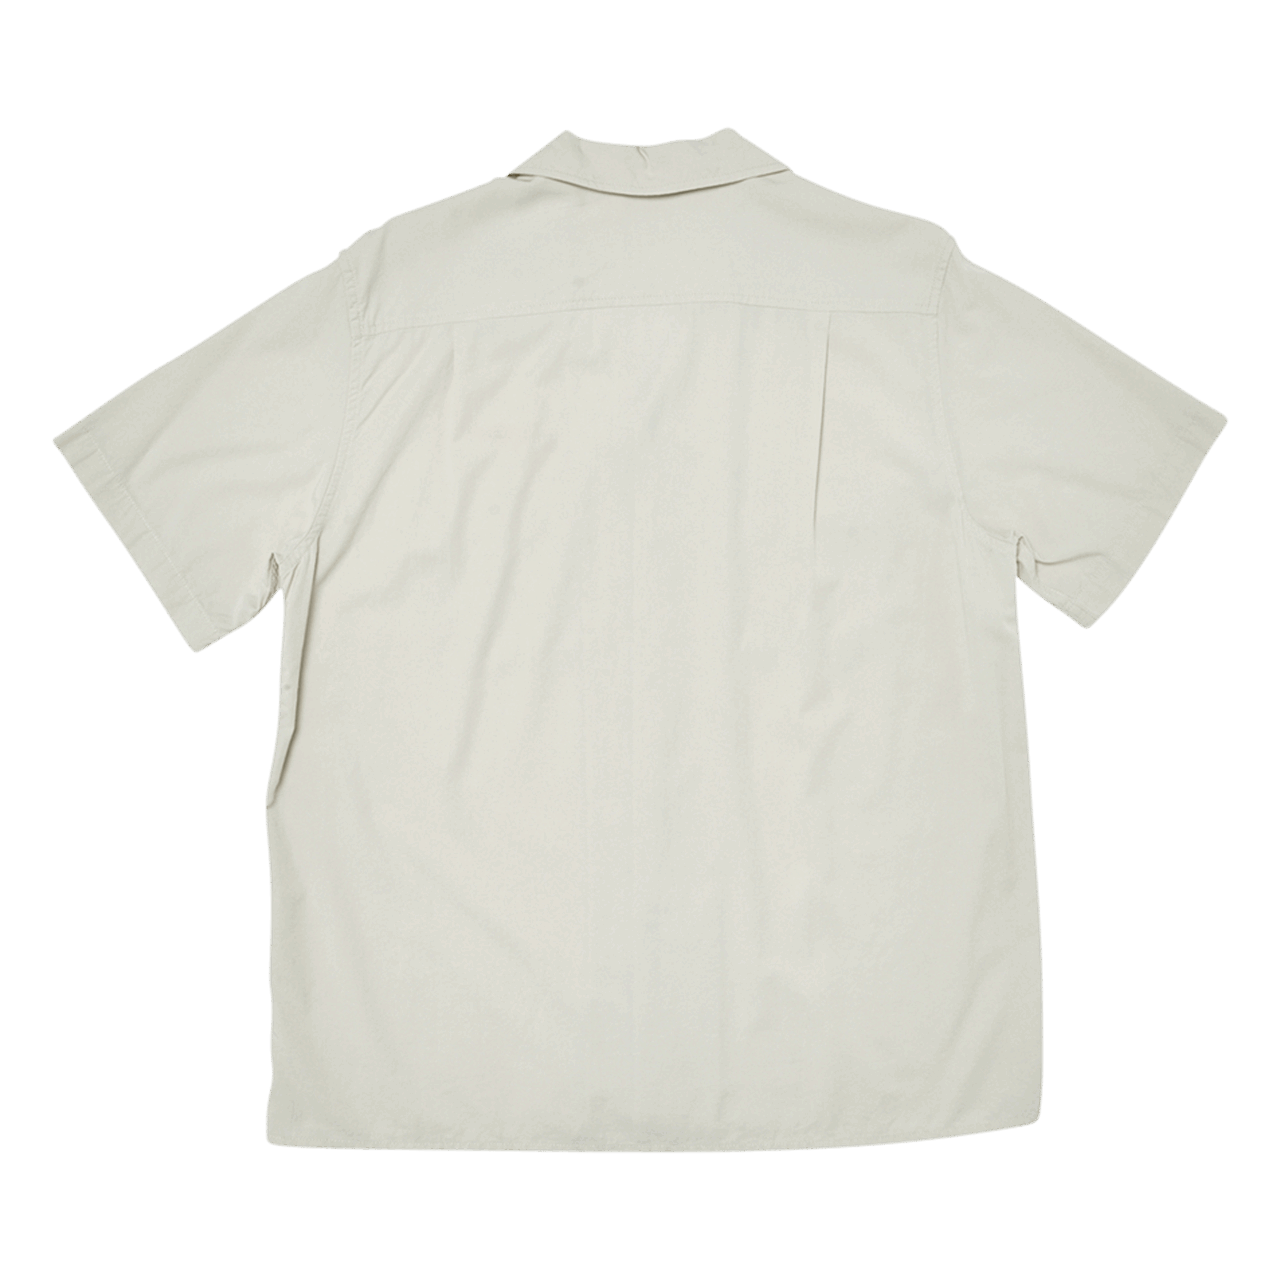 Deus Kingpin Gd Shirt - dirty white